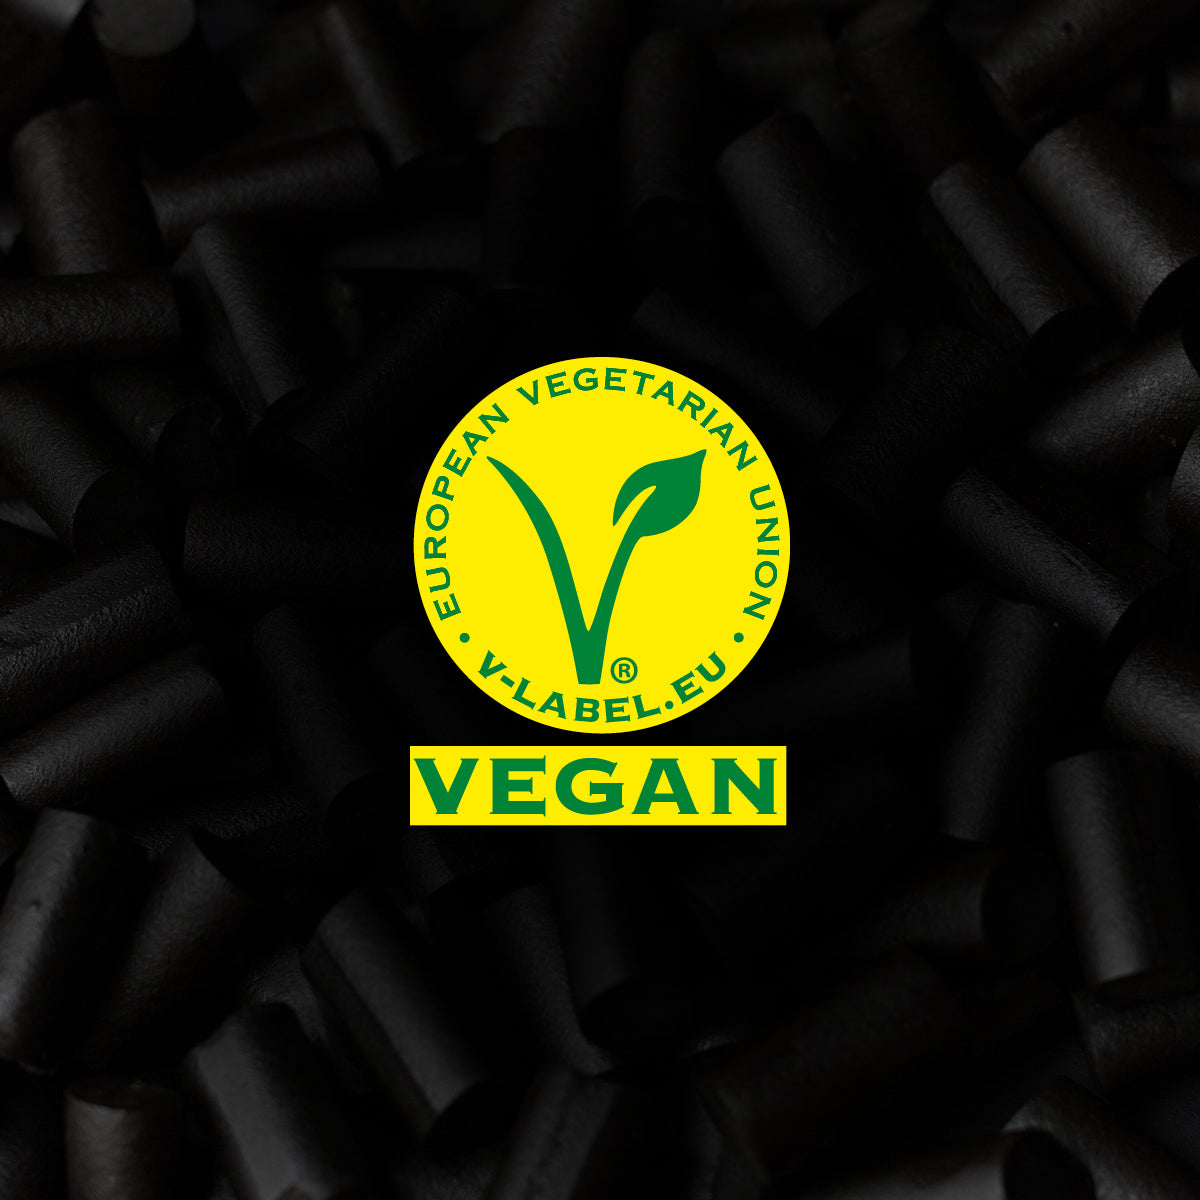 V-Labelin myöntämä Vegan-tunnus